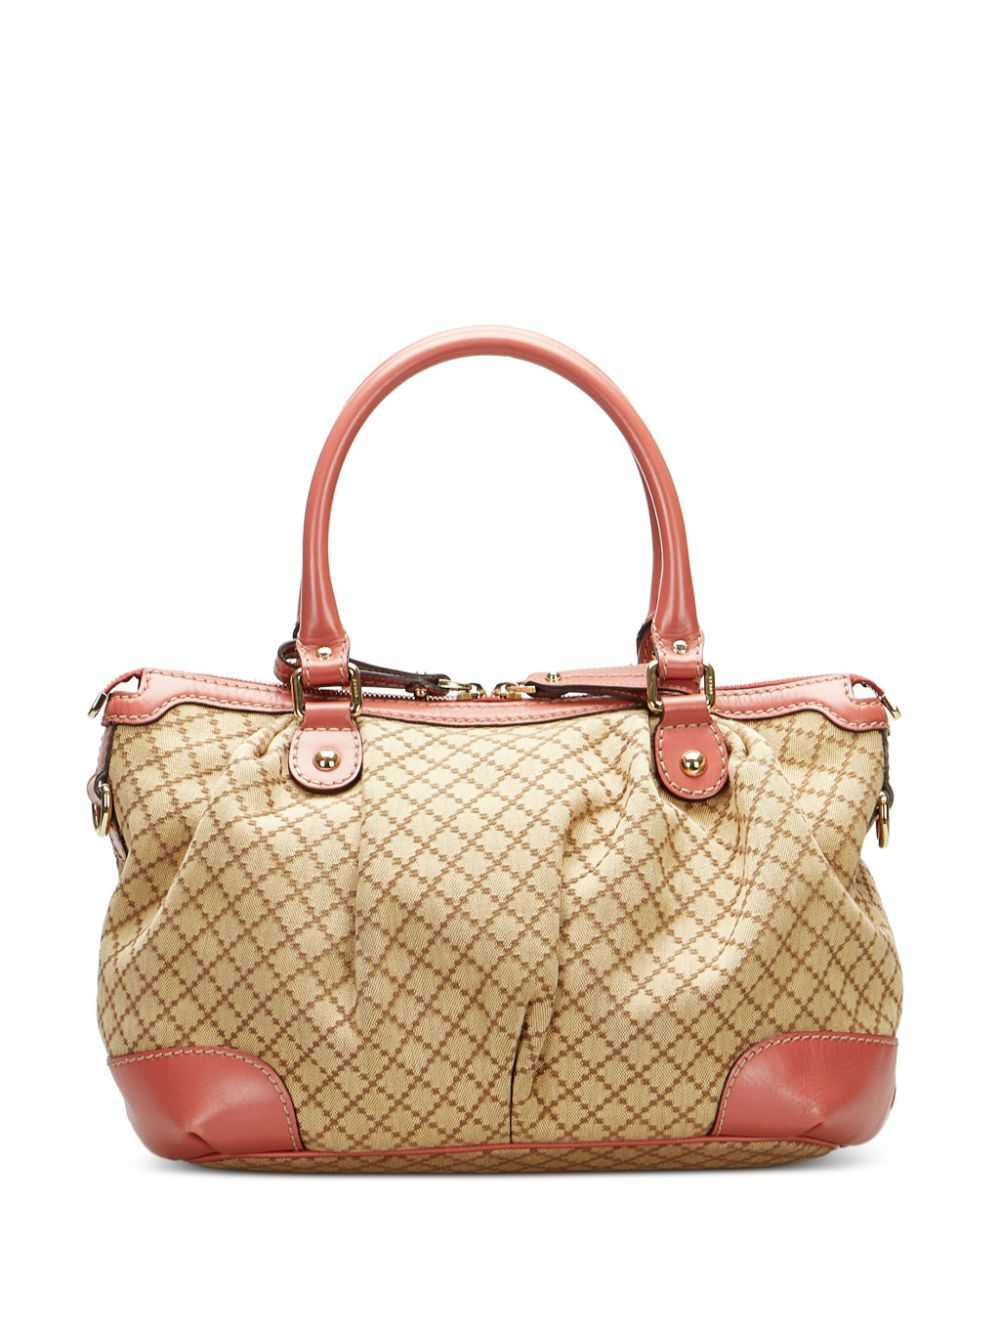 Gucci Pre-Owned Sukey diamante handbag - Neutrals - image 2